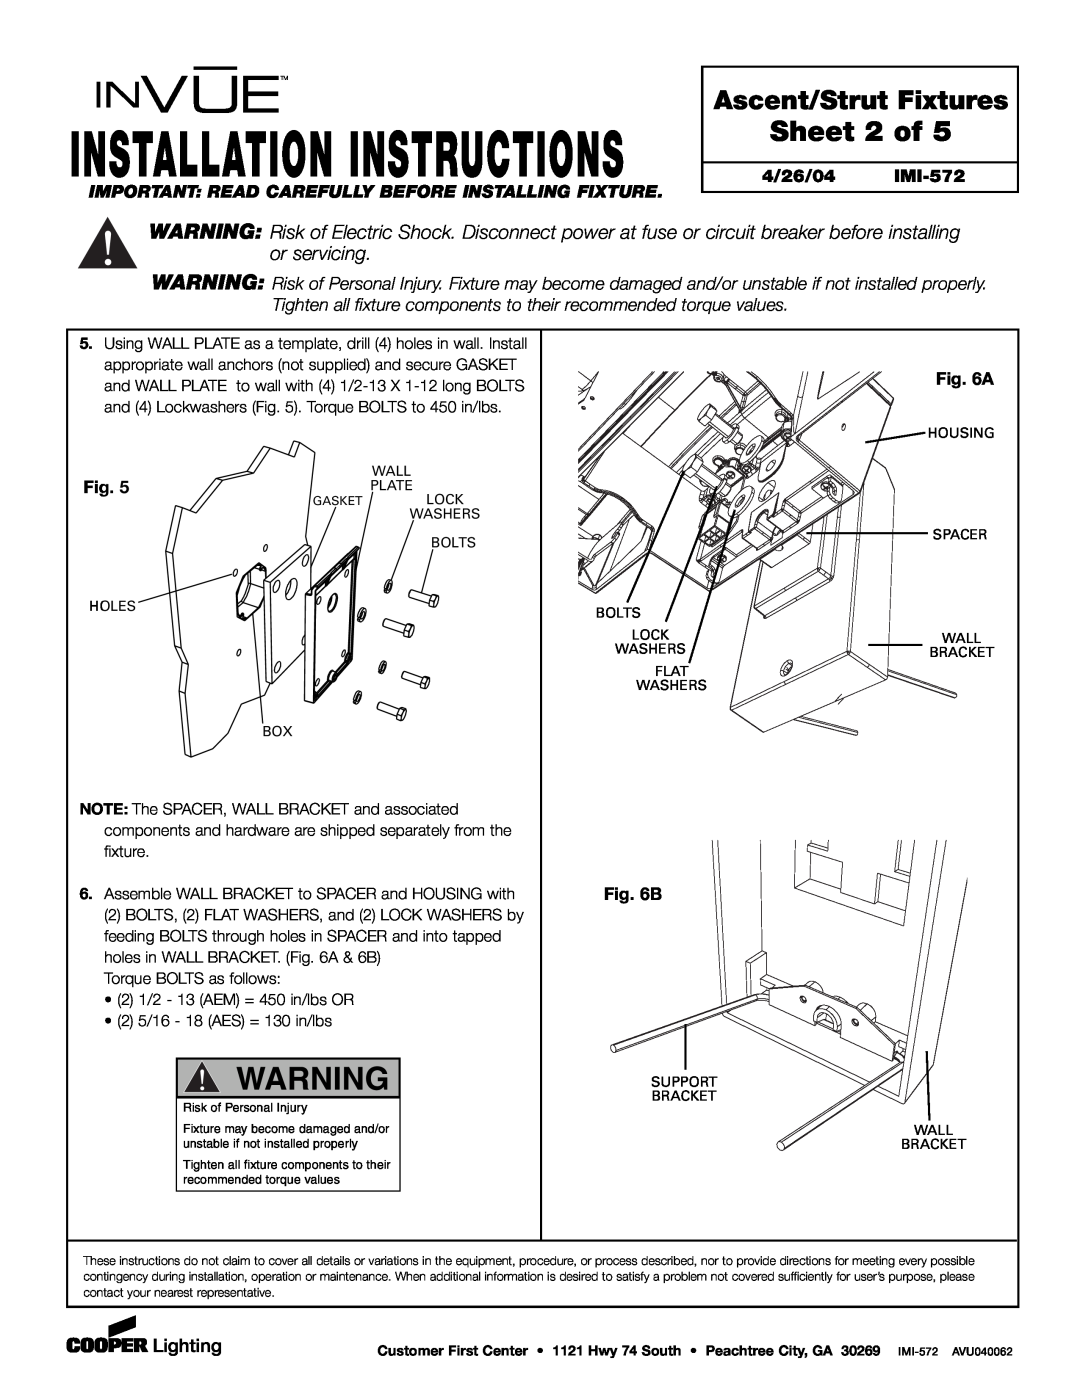 Cooper Lighting Sheet 2 of, B, Installation Instructions, Ascent/Strut Fixtures, 4/26/04 IMI-572 